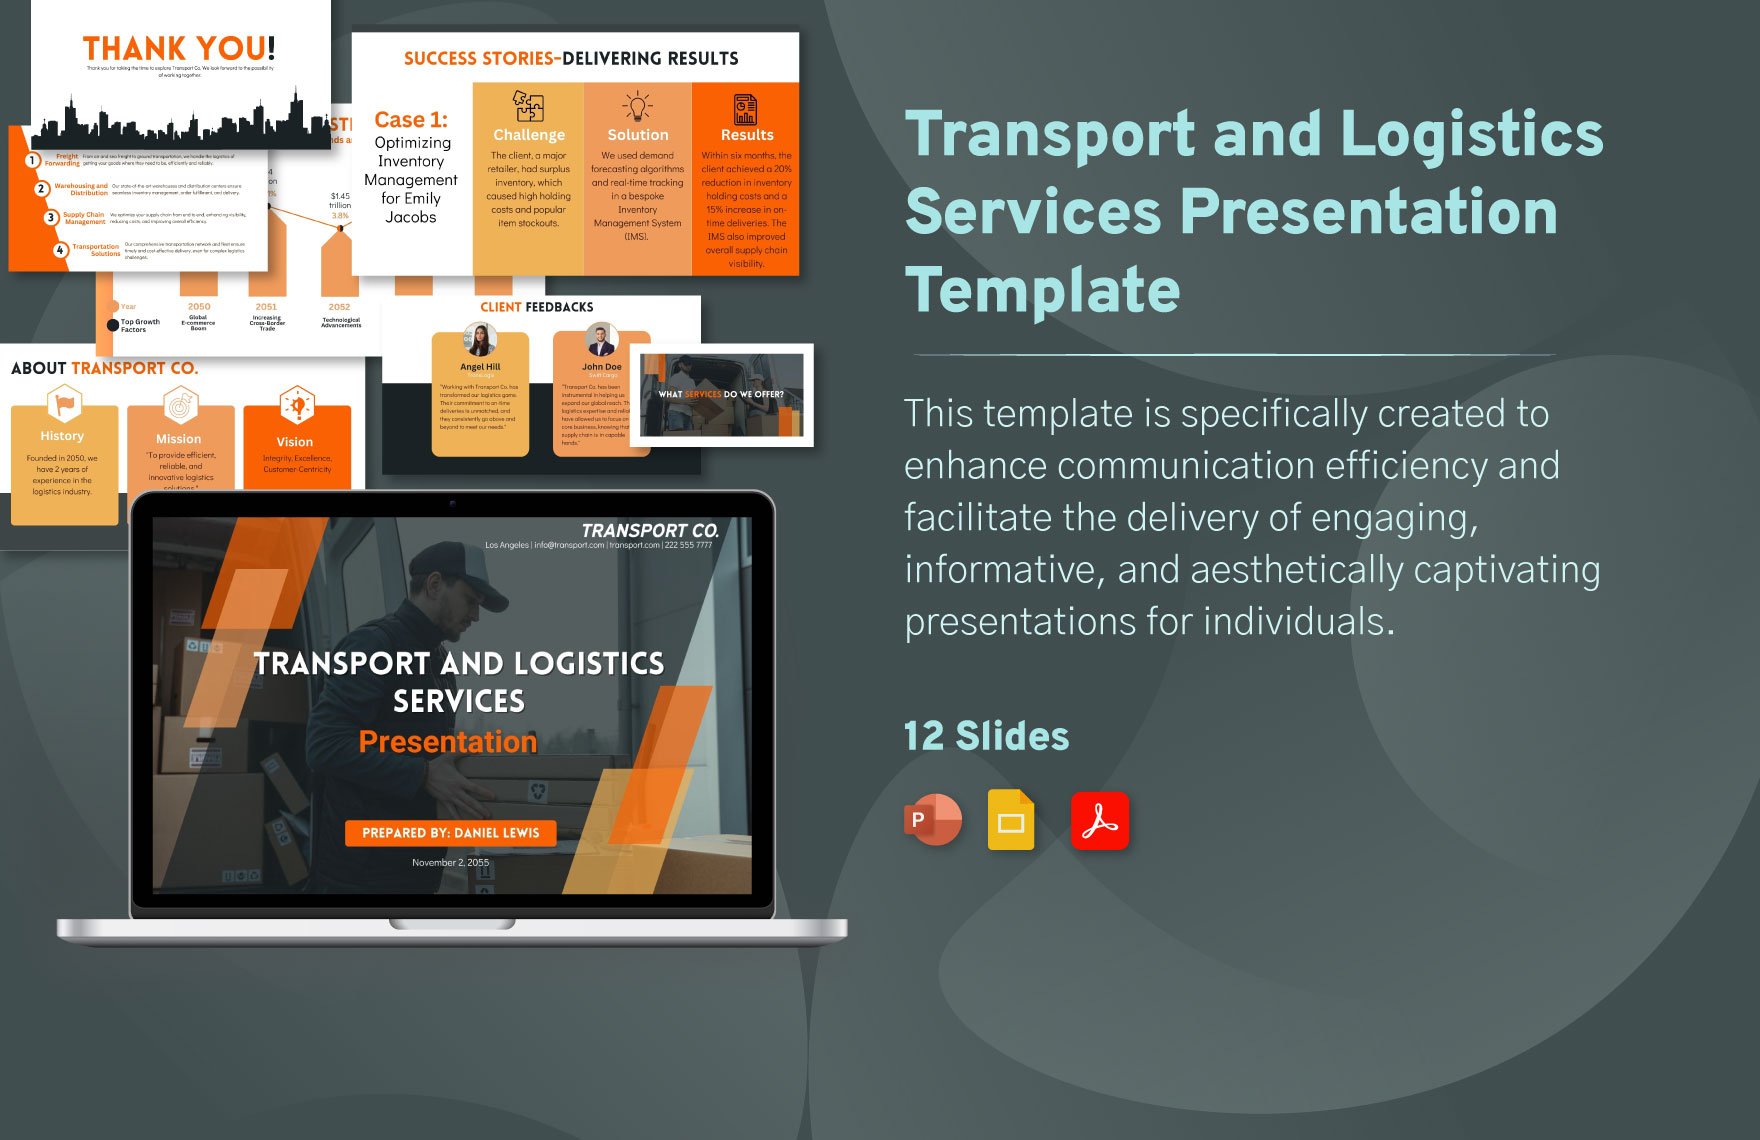 Transport and Logistics Services Presentation Template